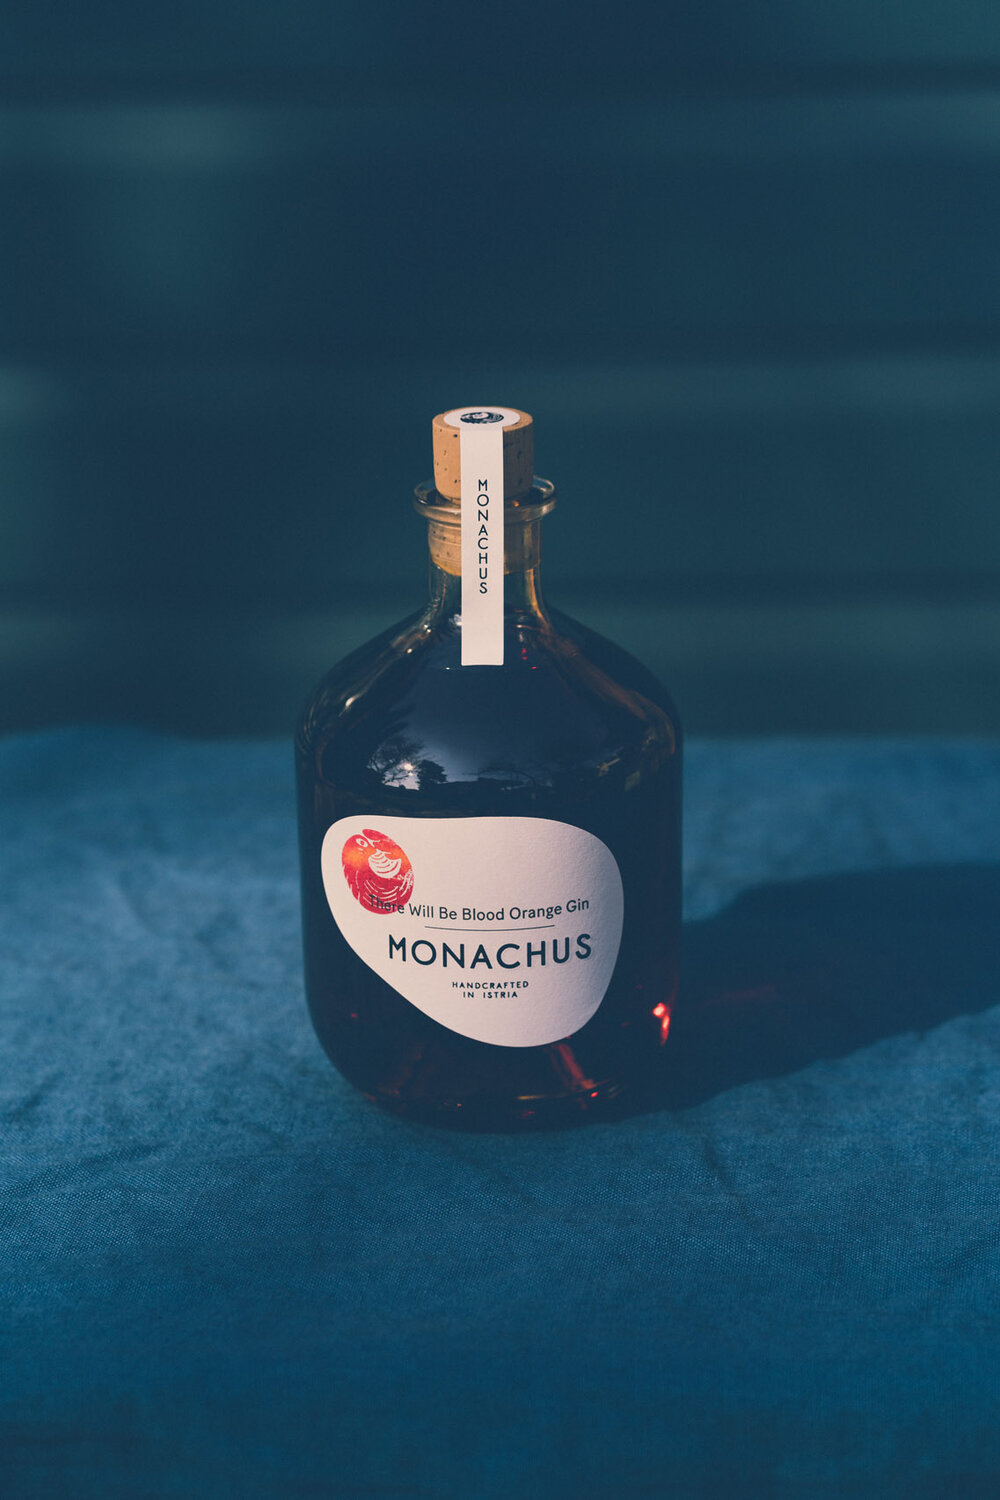 There Will Be Blood Orange Gin 0.5L — Monachus